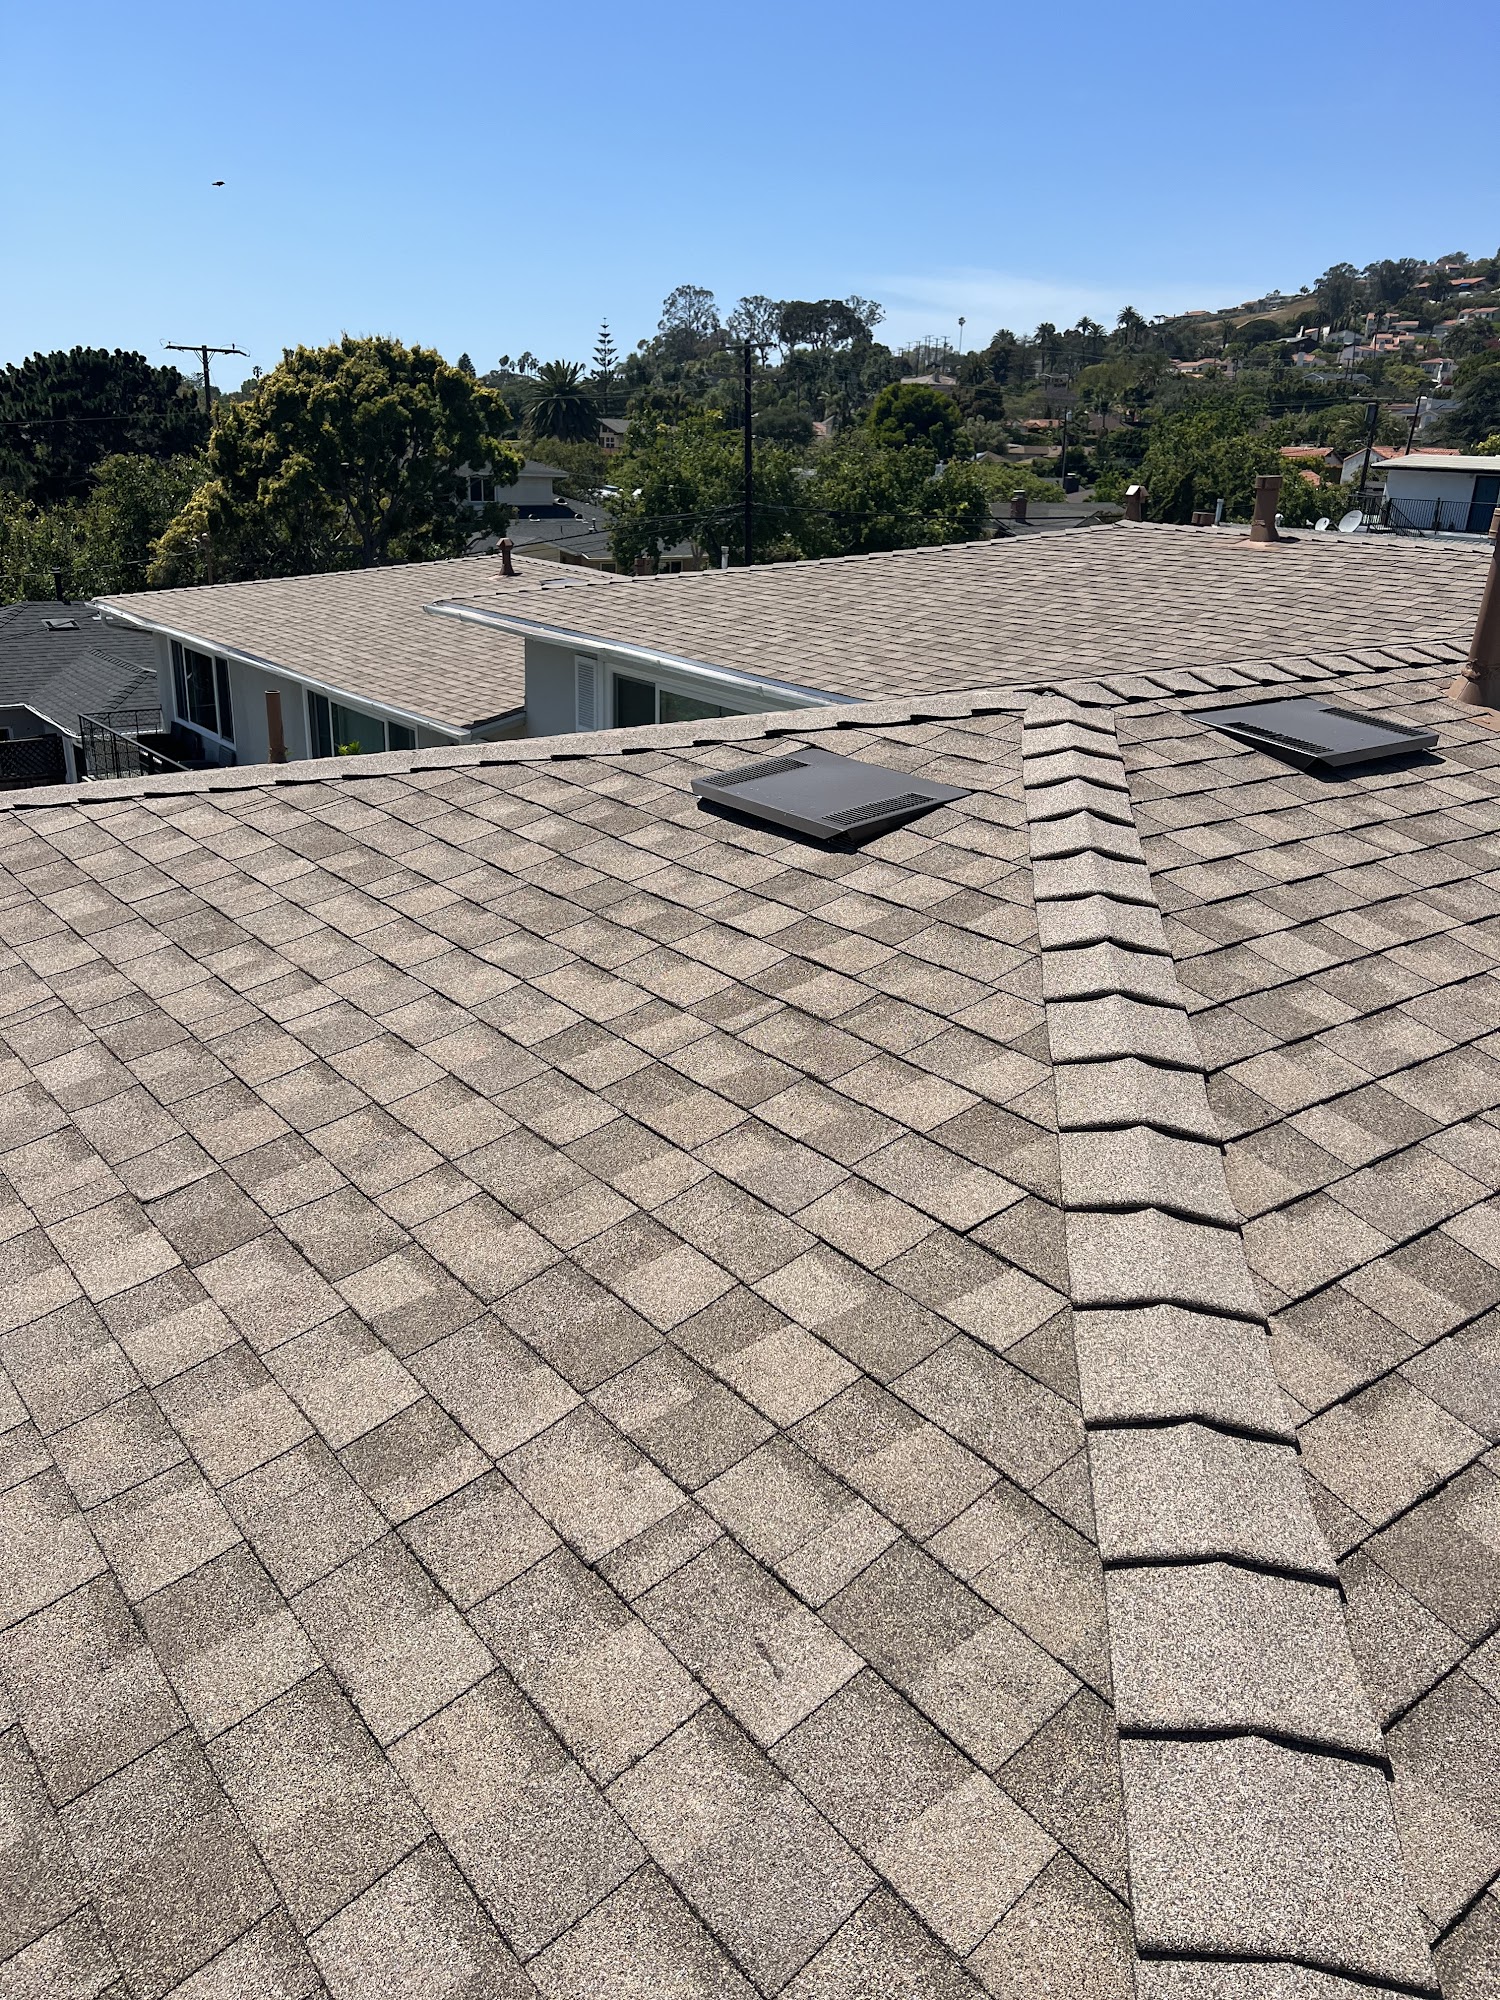 Home Roofing of Santa Barbara